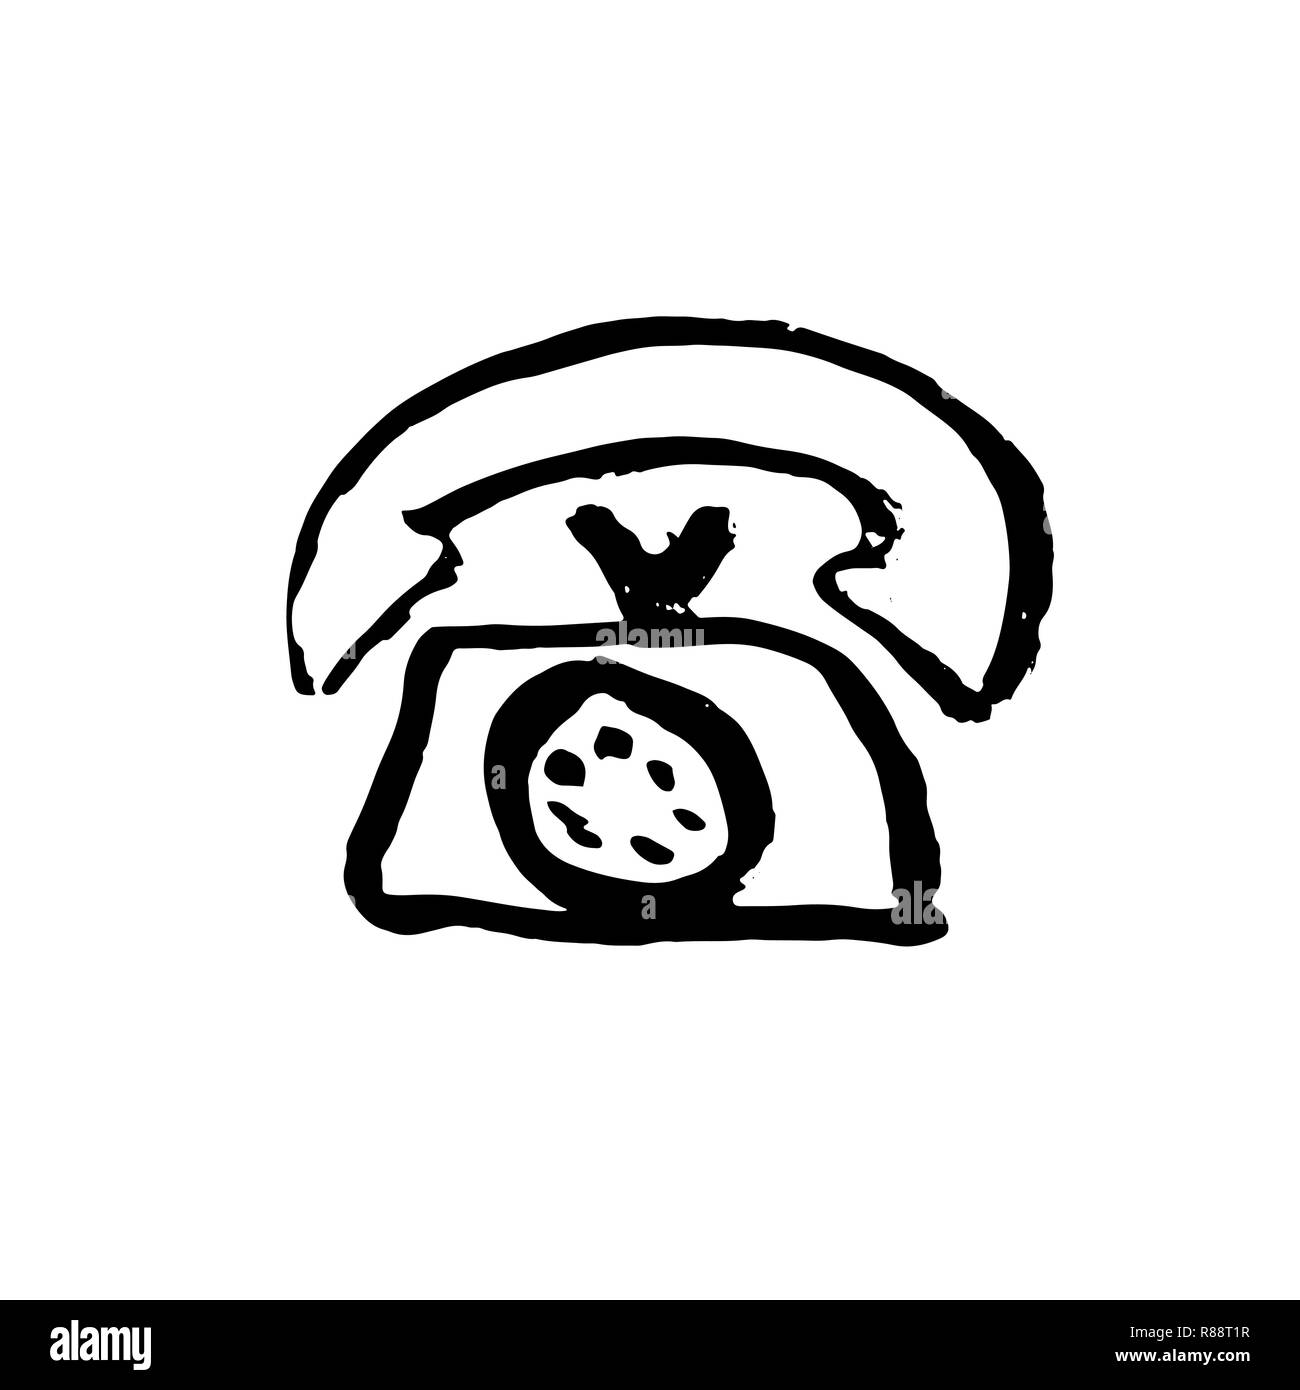 Phone grunge icon. Vector ink brush illustration. Stock Vector